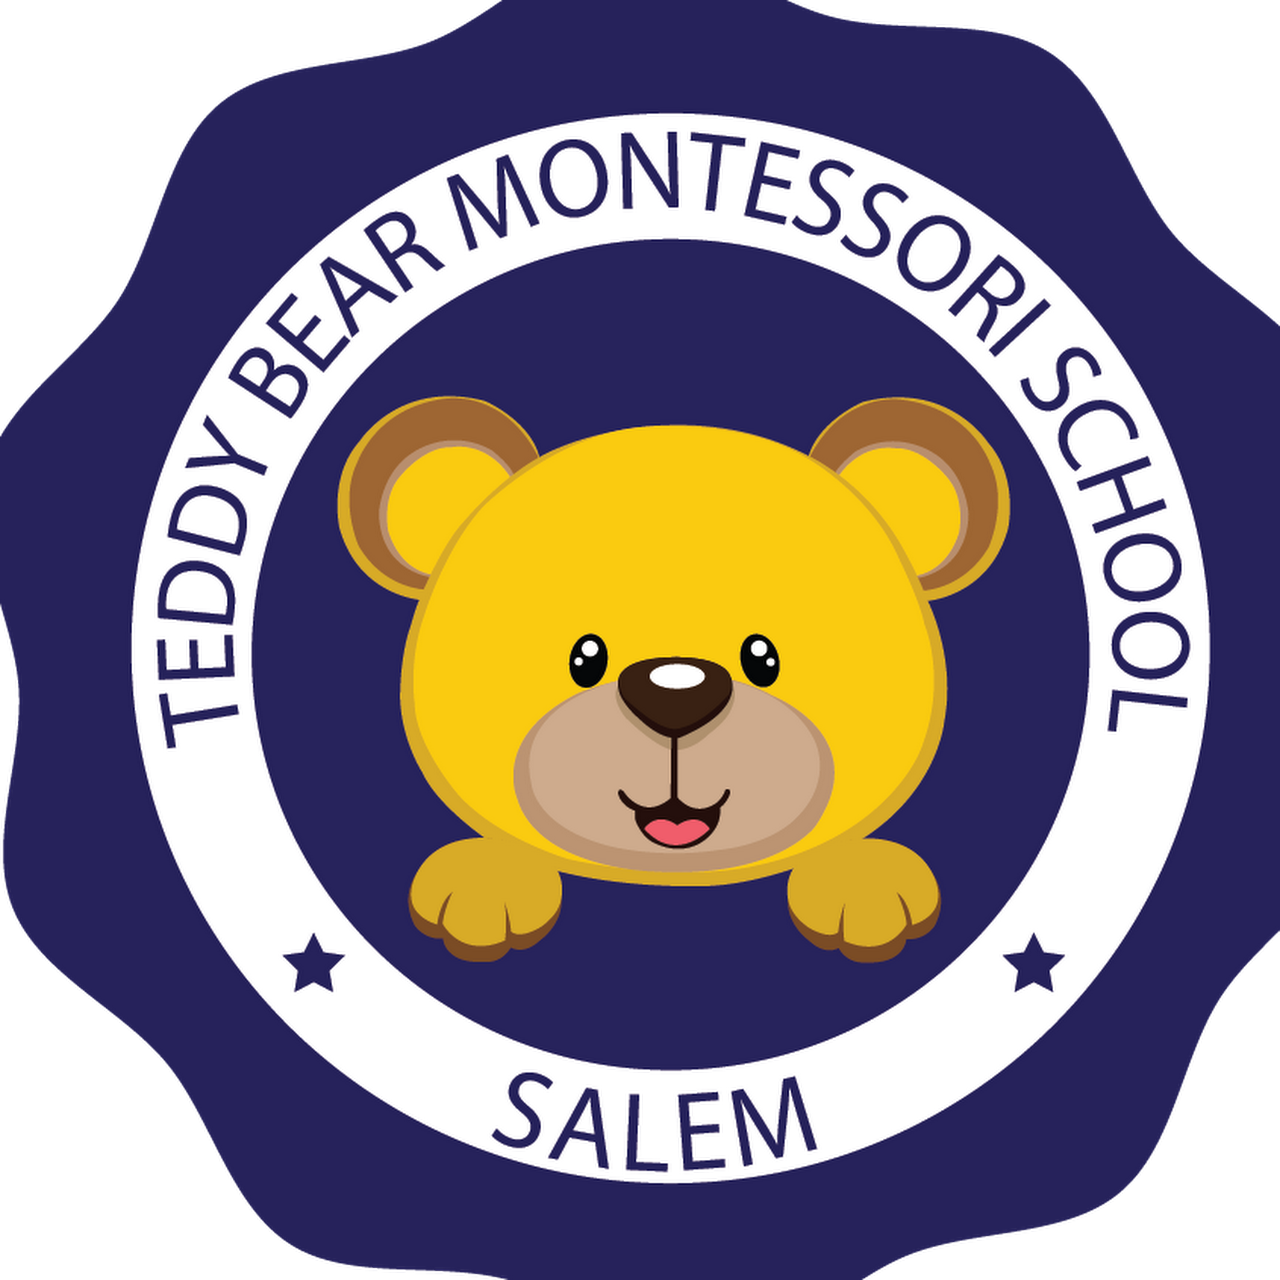 Teddy Bear Montessori School|Schools|Education